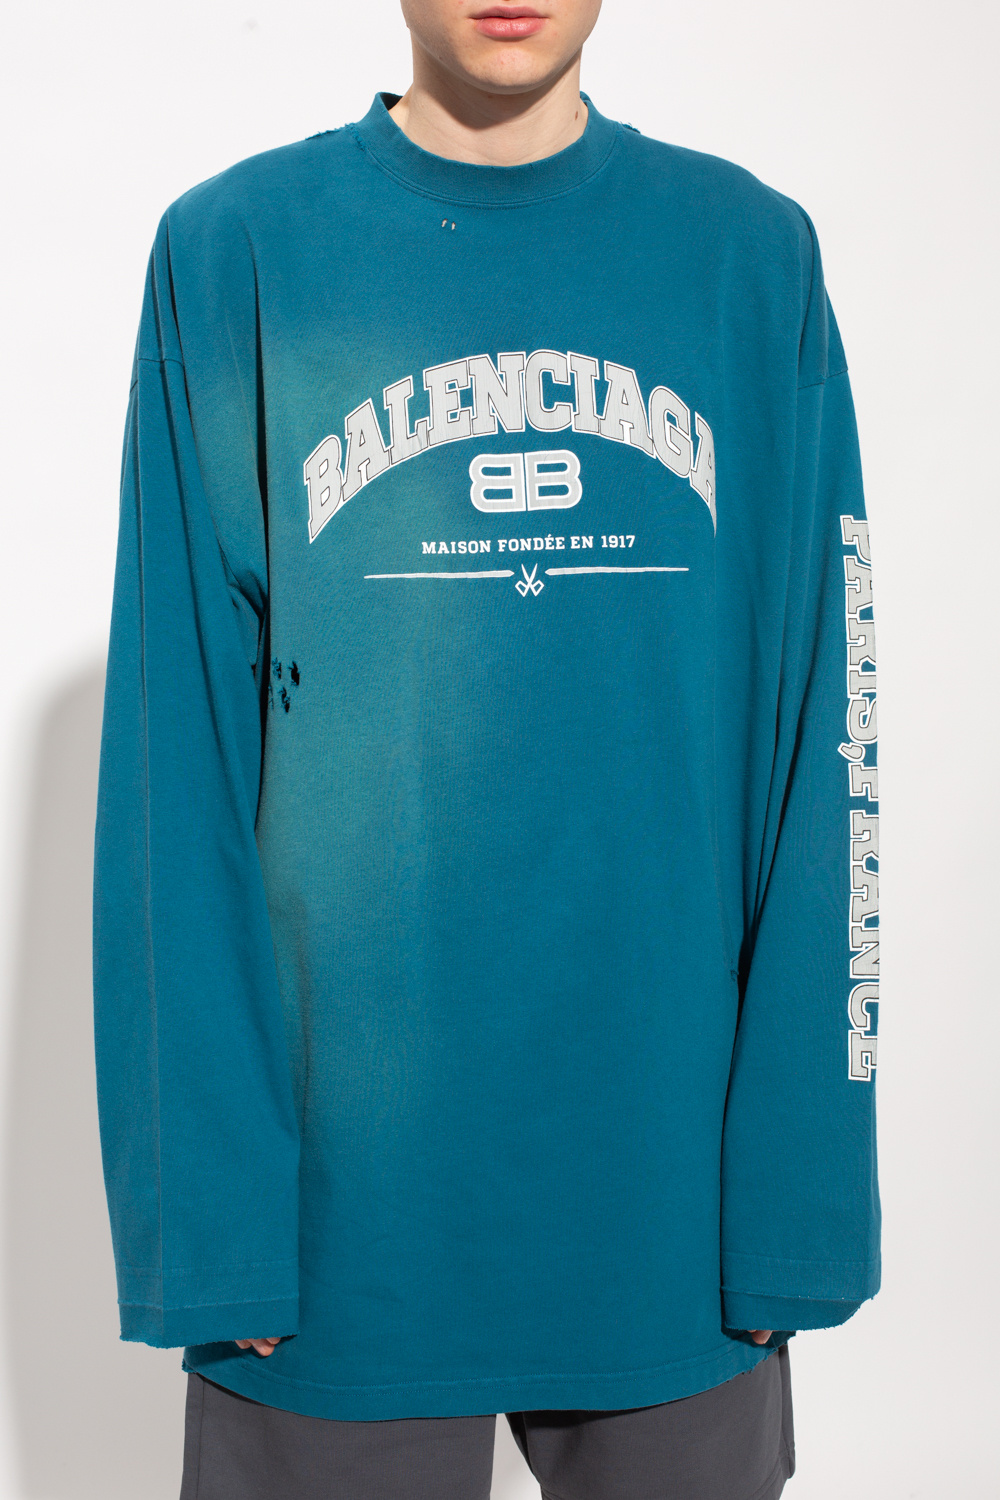 BALENCIAGA Tshirt with uniform logo  Black  Balenciaga tshirt 612964  TIV79 online on GIGLIOCOM